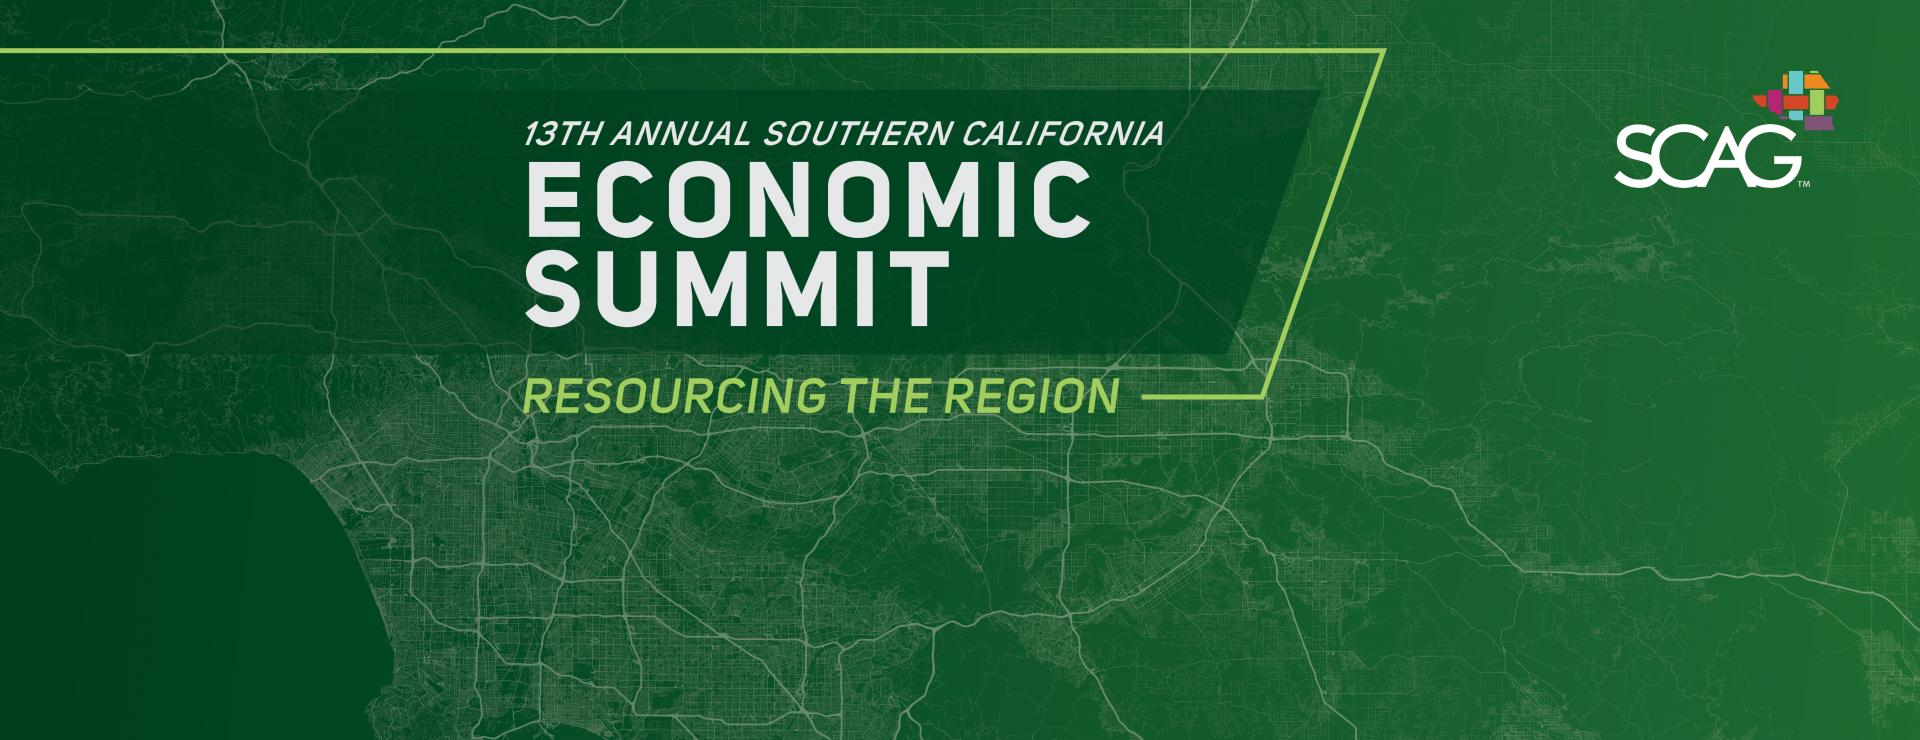 The 13th Annual Southern California Economic Summit